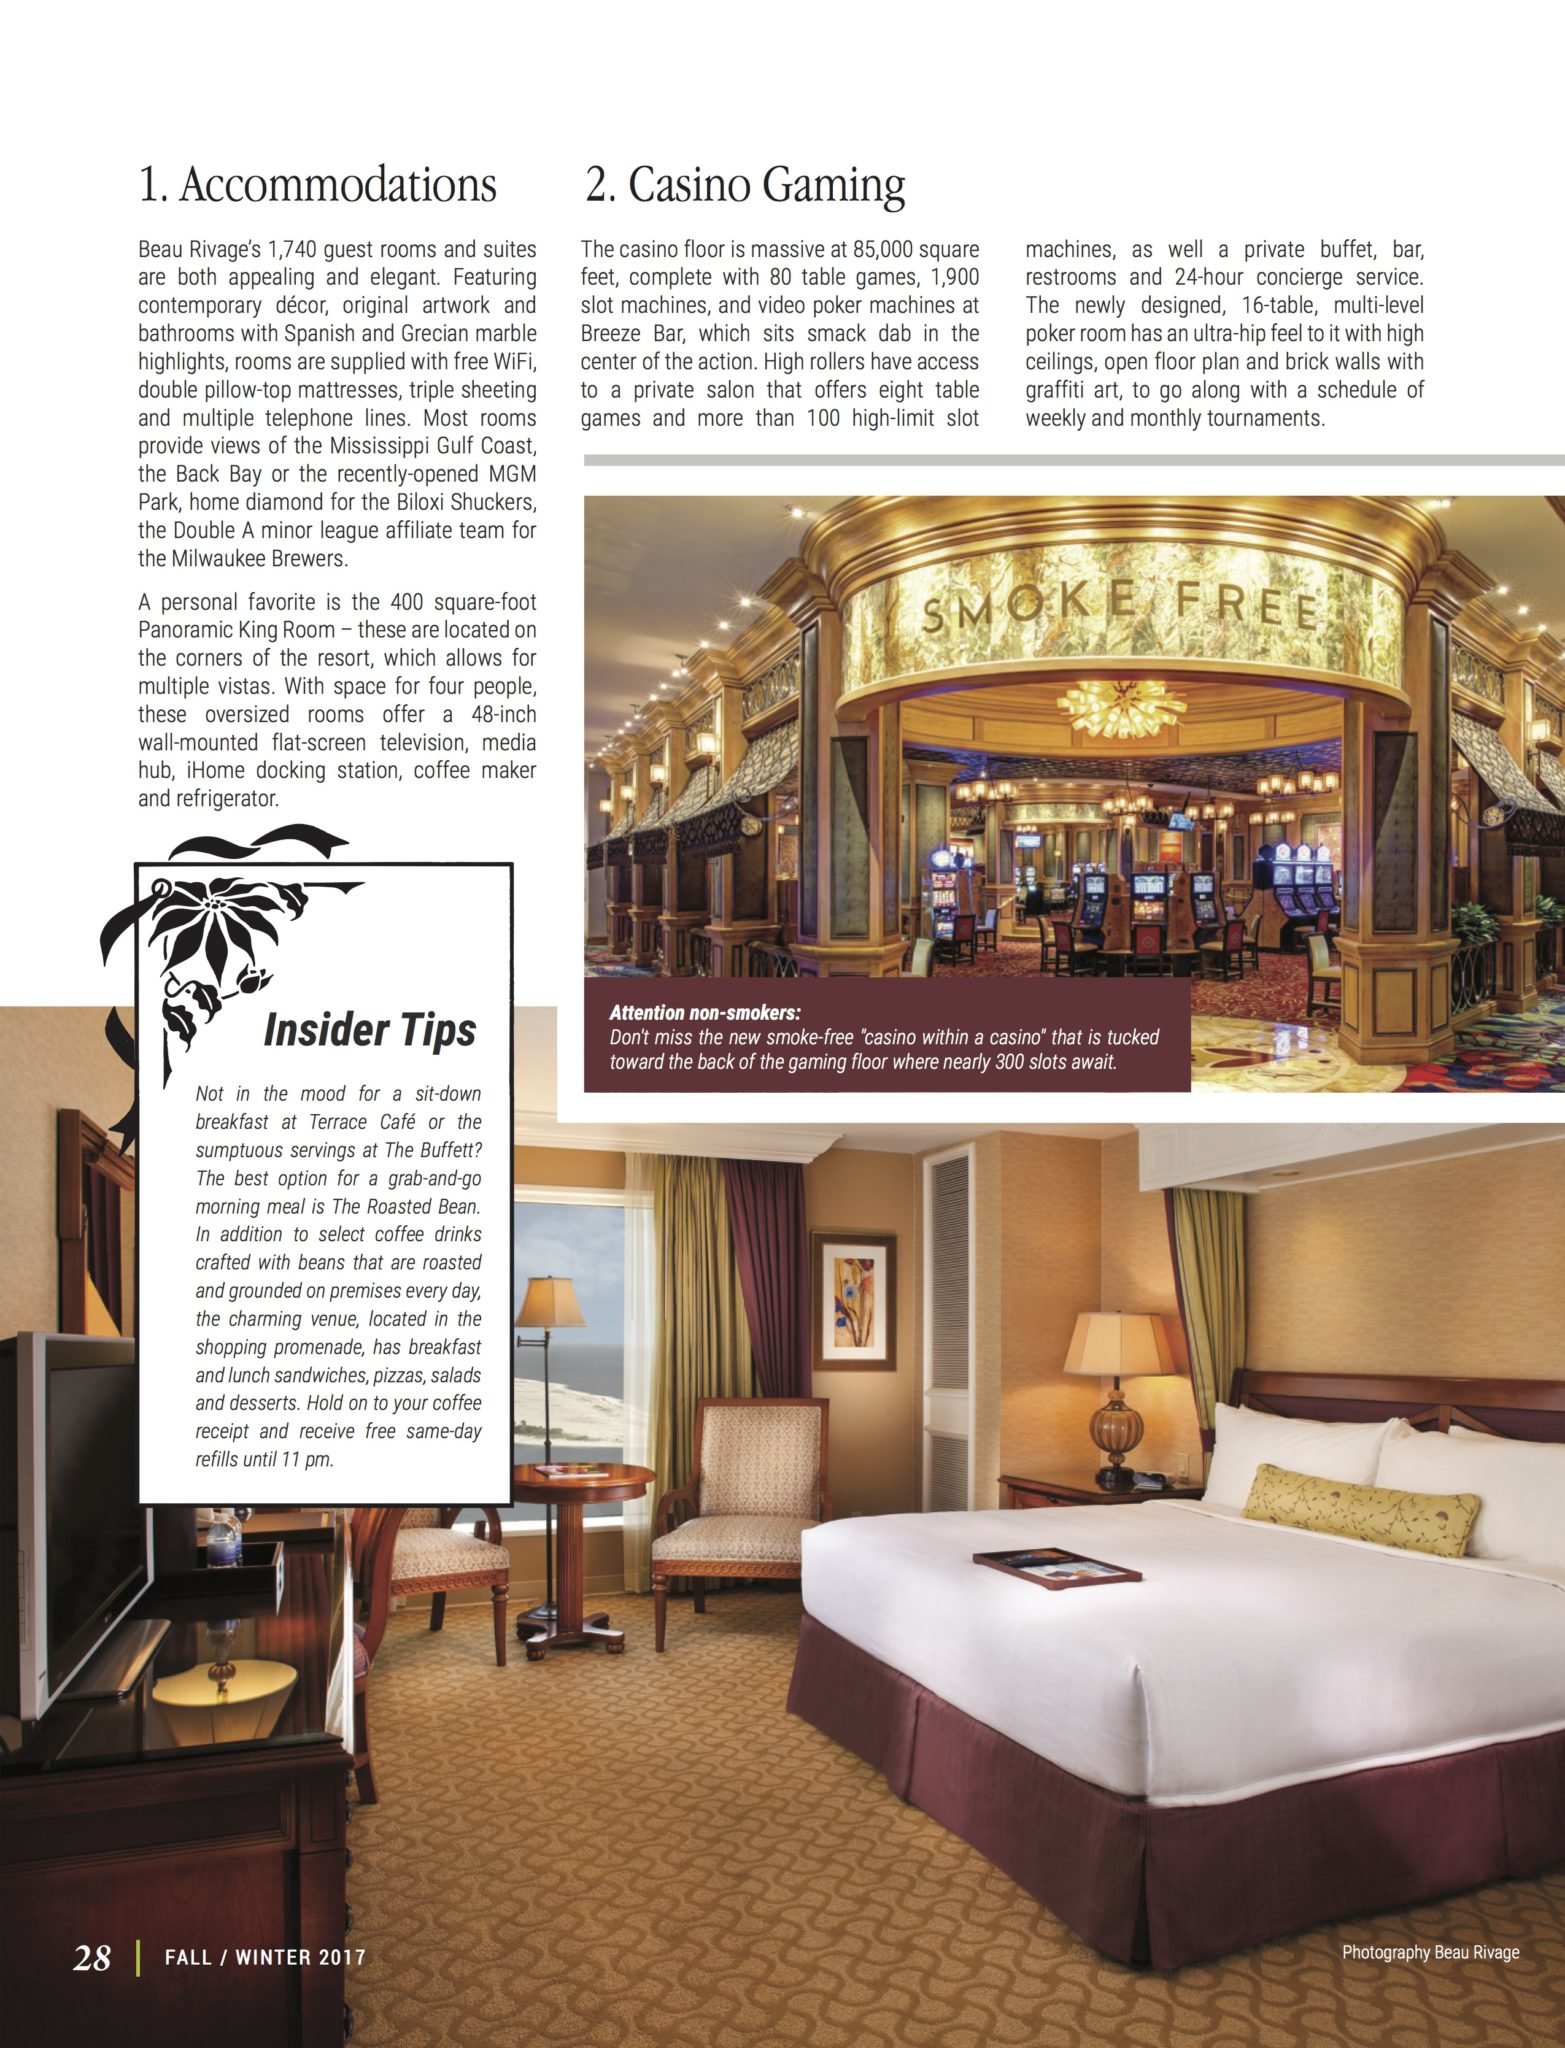 LuxeGetaways - Luxury Travel - Luxury Travel Magazine - Luxe Getaways - Luxury Lifestyle - Fall/Winter 2017 Magazine Issue - Digital Magazine - Travel Magazine - Beau Rivage - Casino - Golf